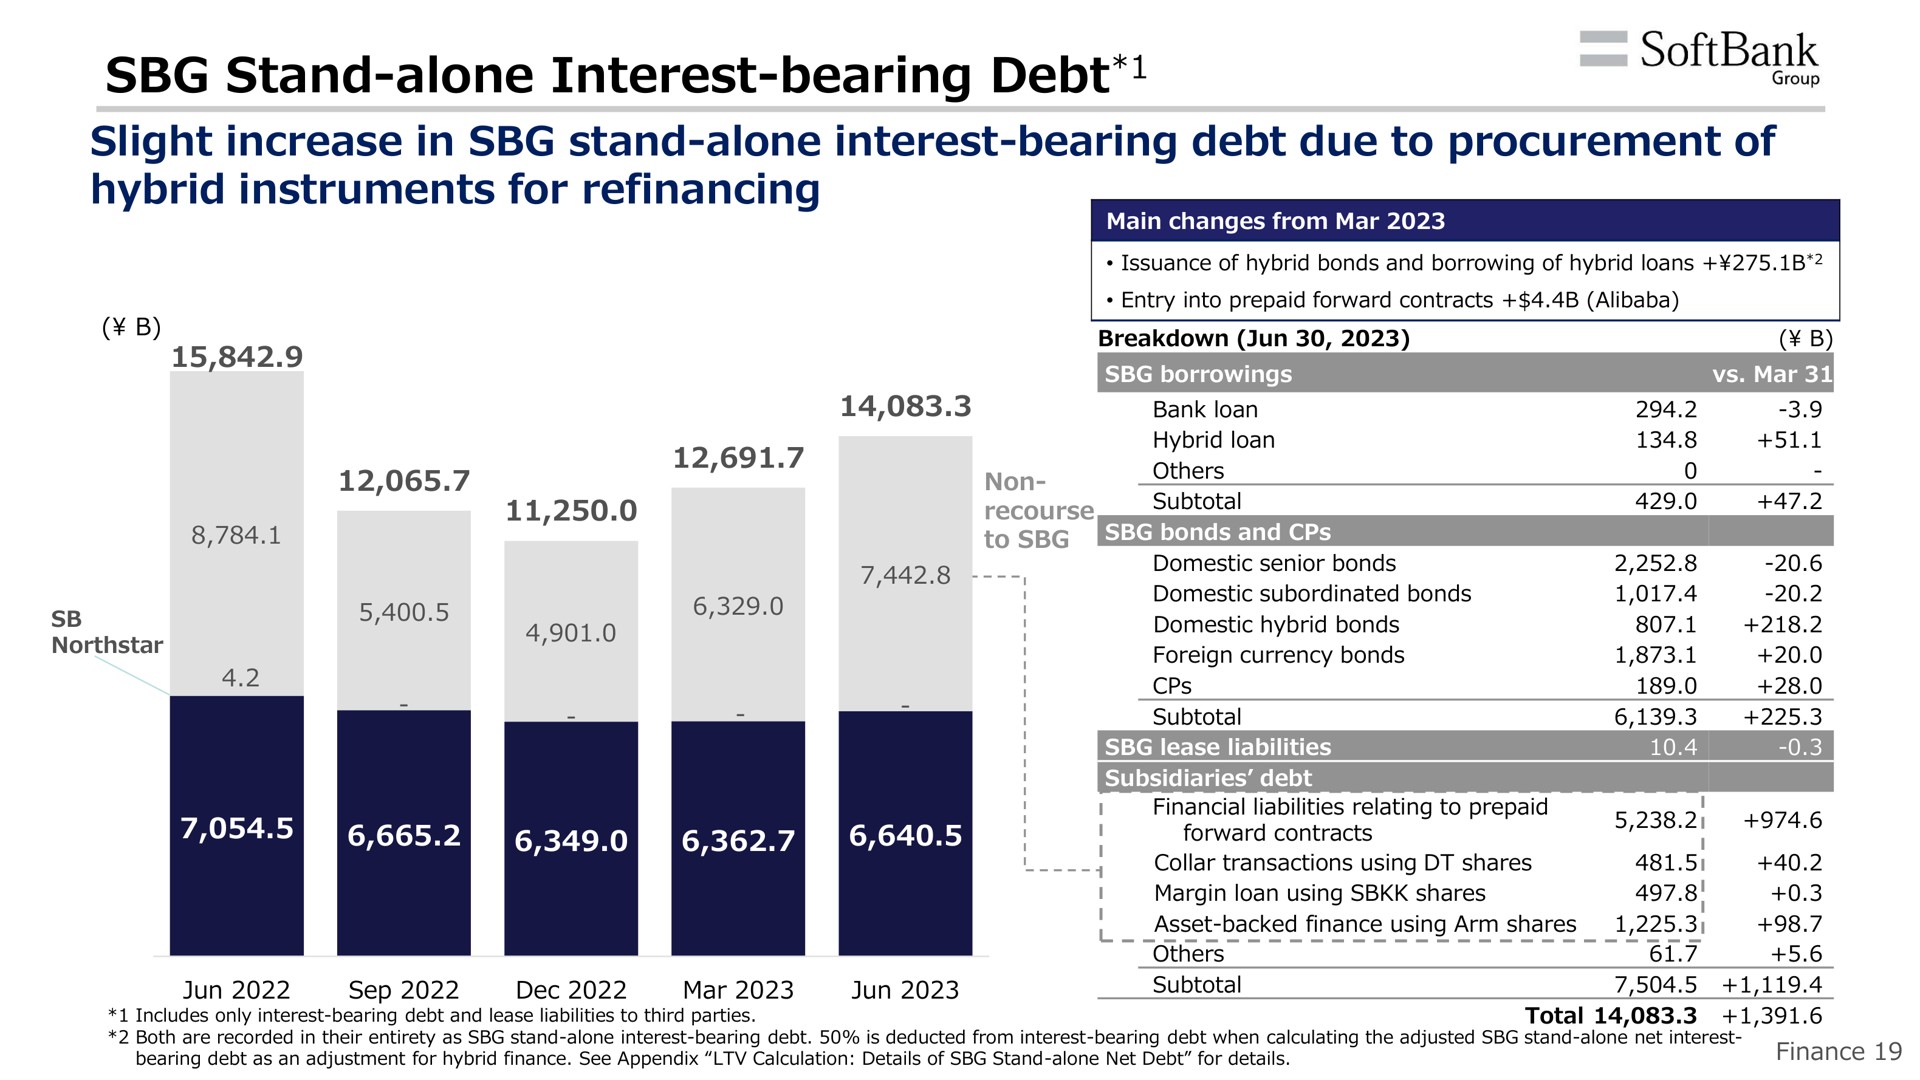 stand alone interest bearing debt asset backed finance using arm shares | SoftBank